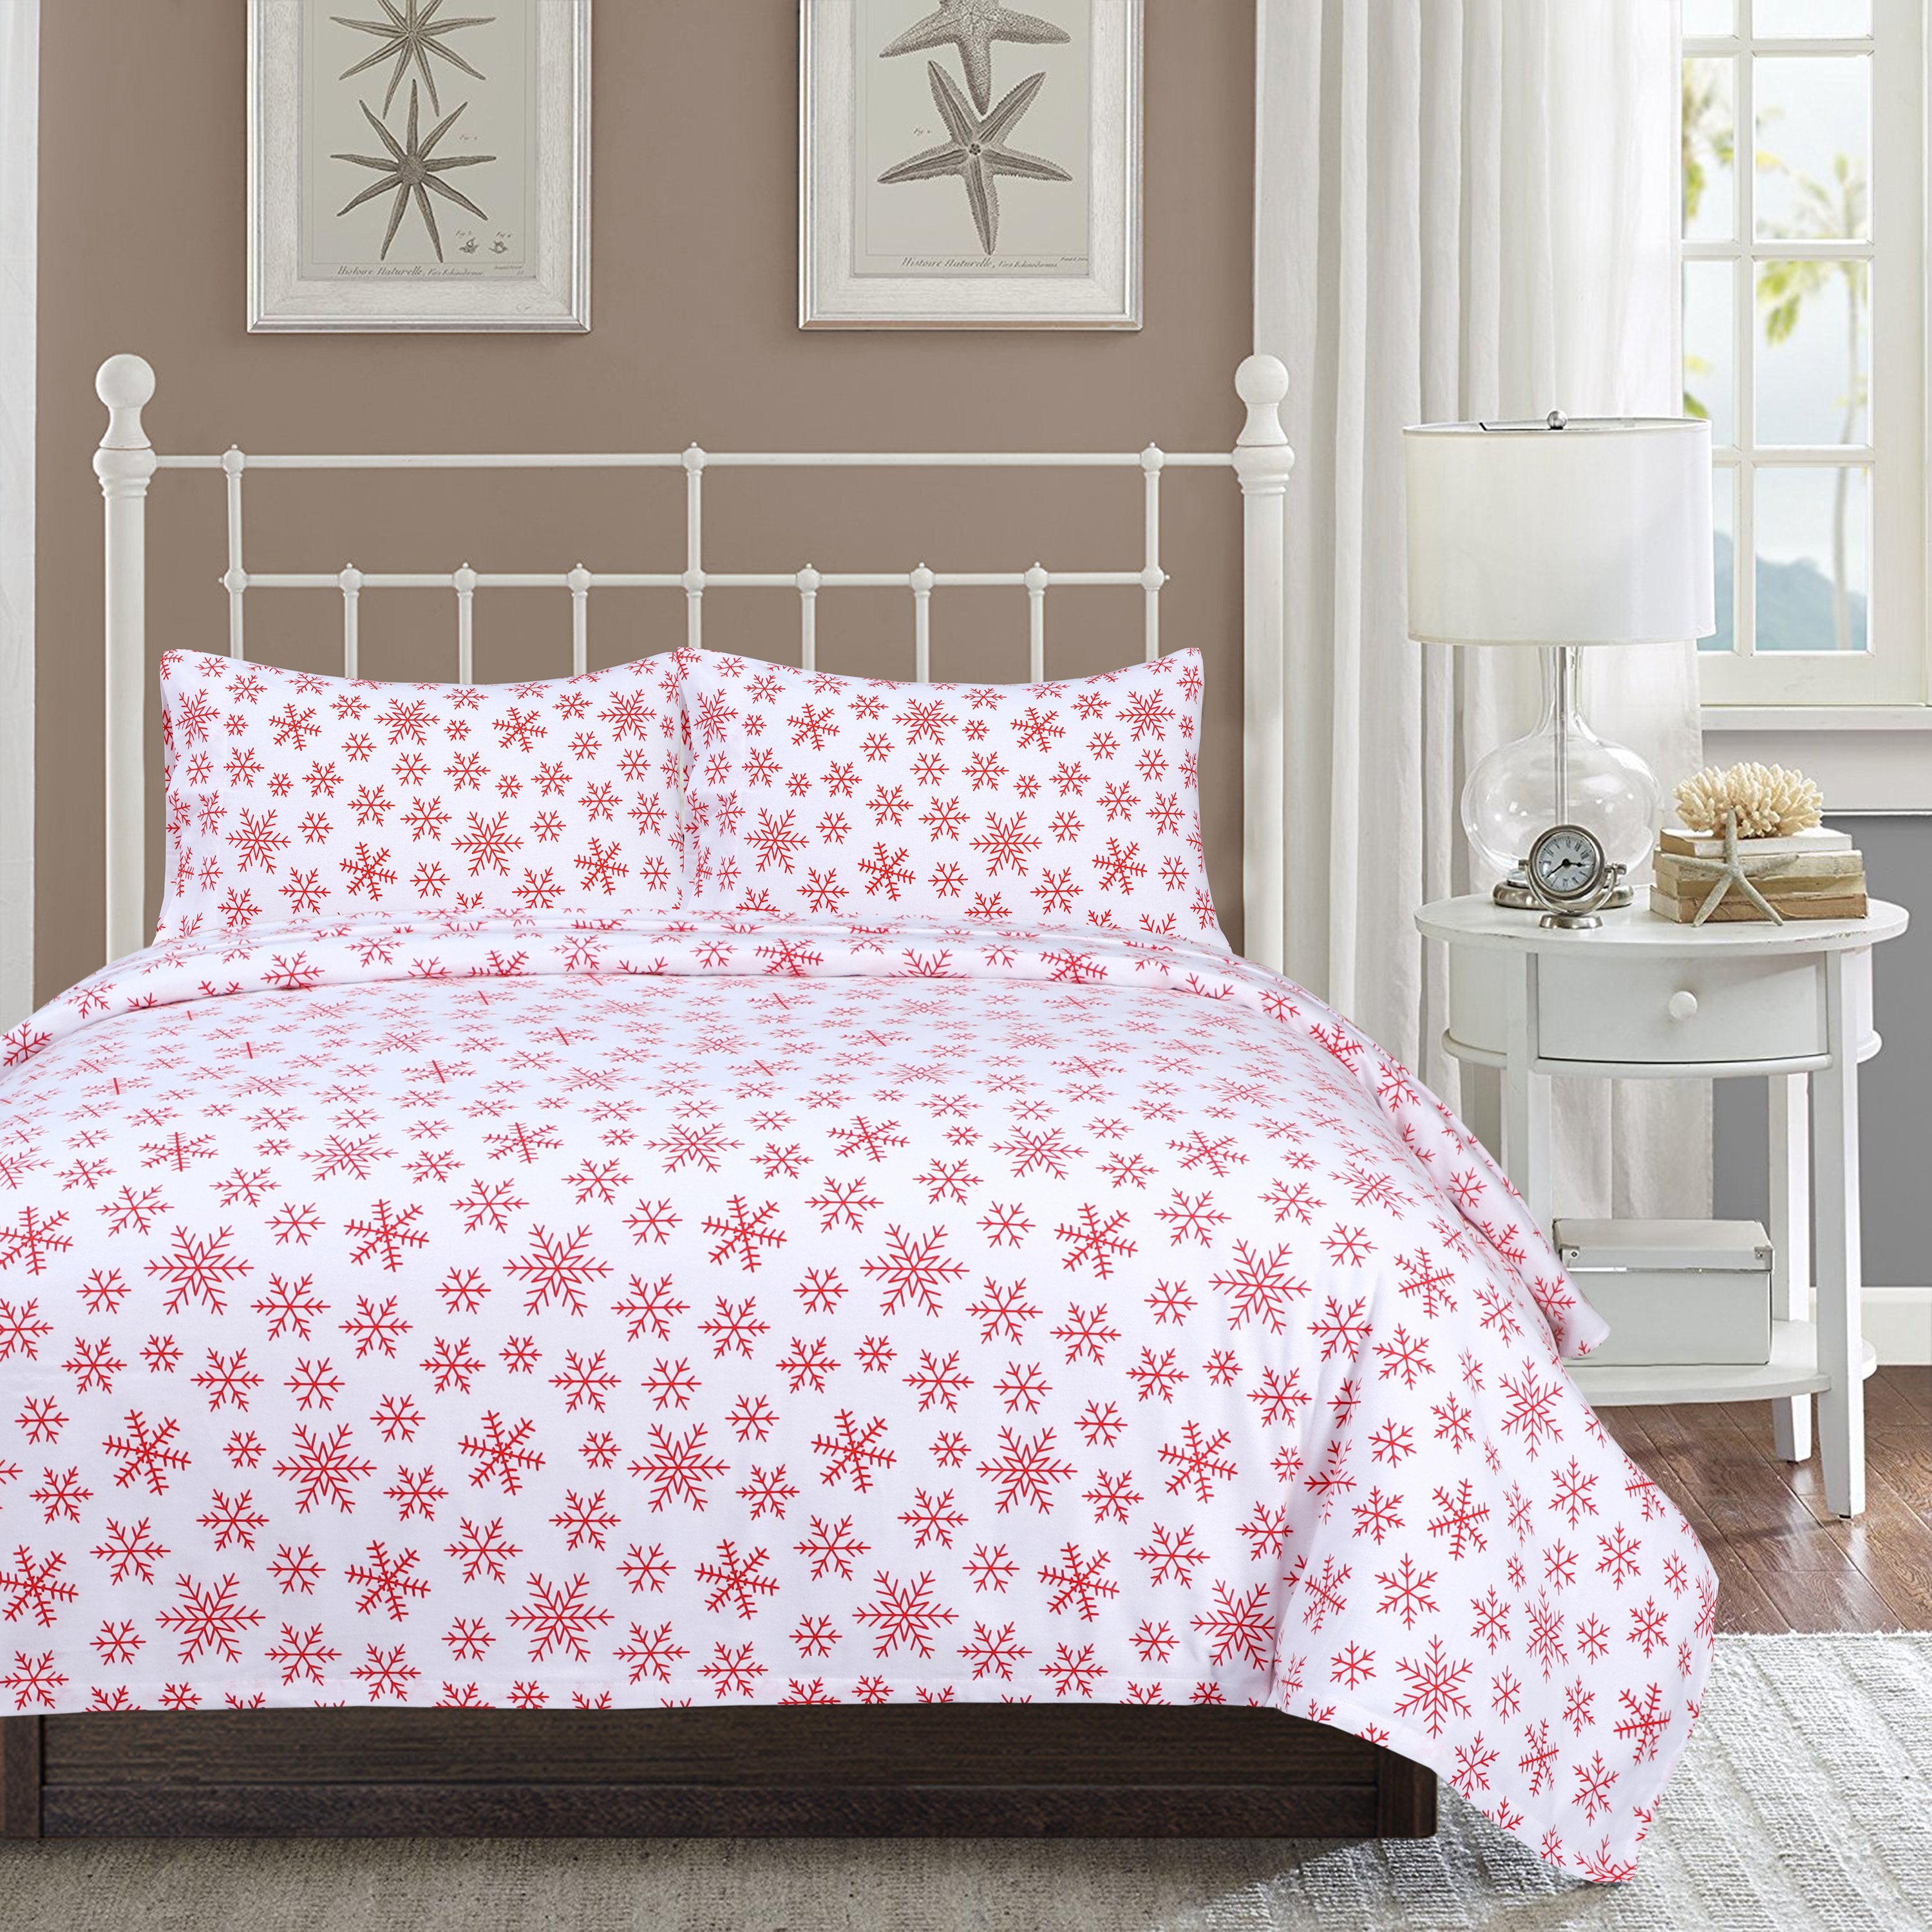 Bedlam Children's Stars 100% Brushed Cotton Reversible Duvet Cover Bed Set Pink 